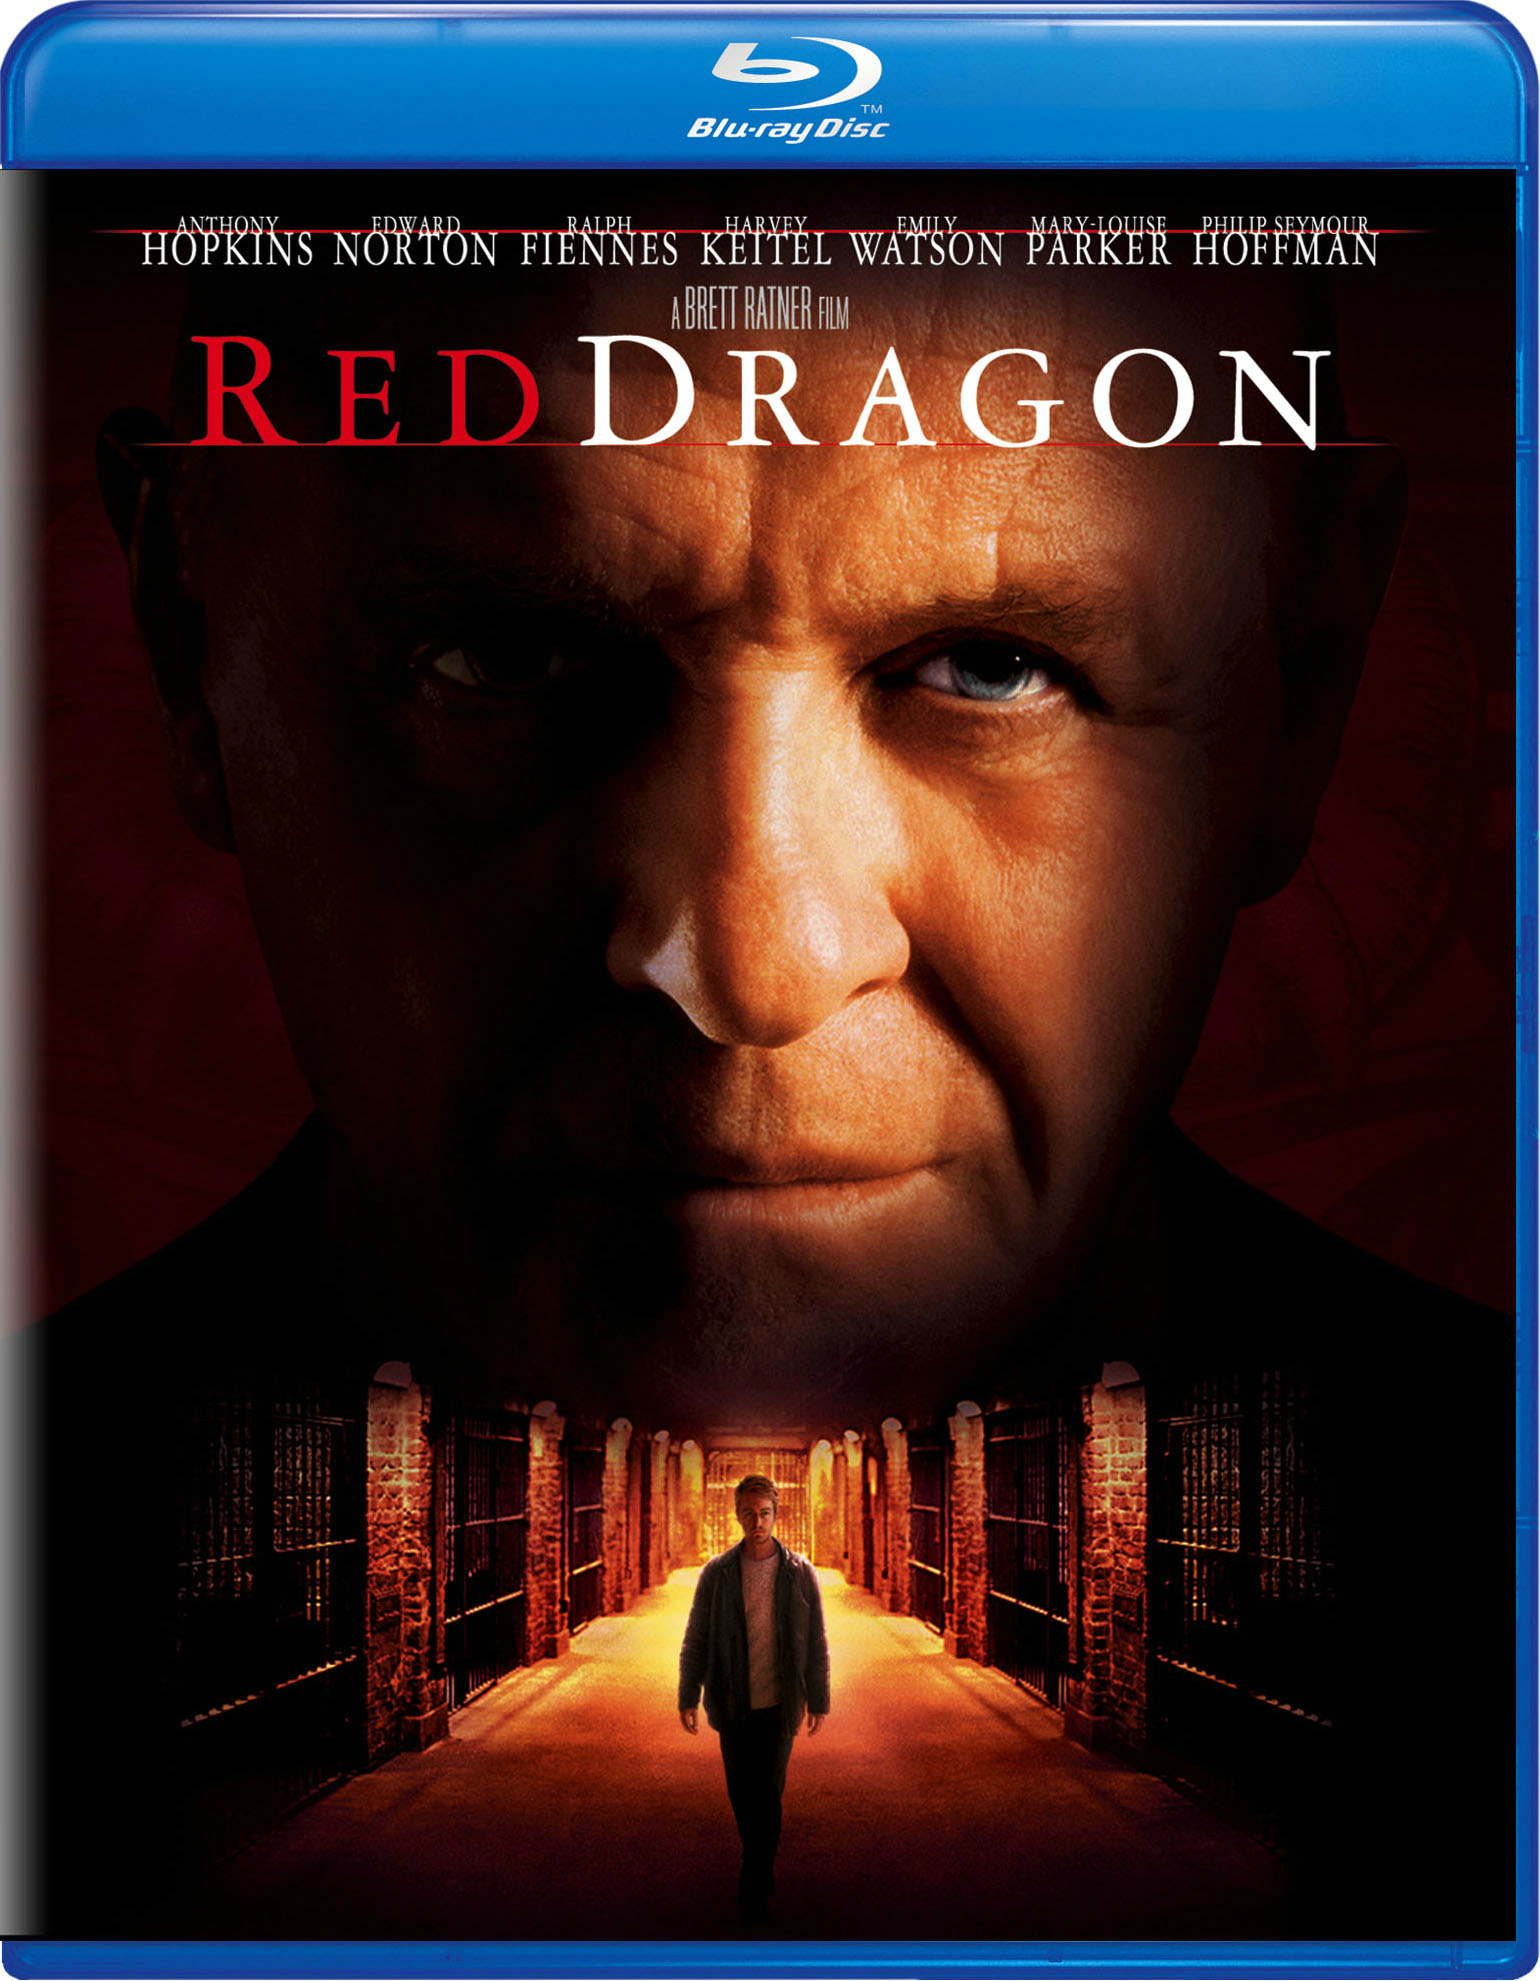 Red Dragon - Blu-ray [ 2002 ]  - Thriller Movies On Blu-ray - Movies On GRUV